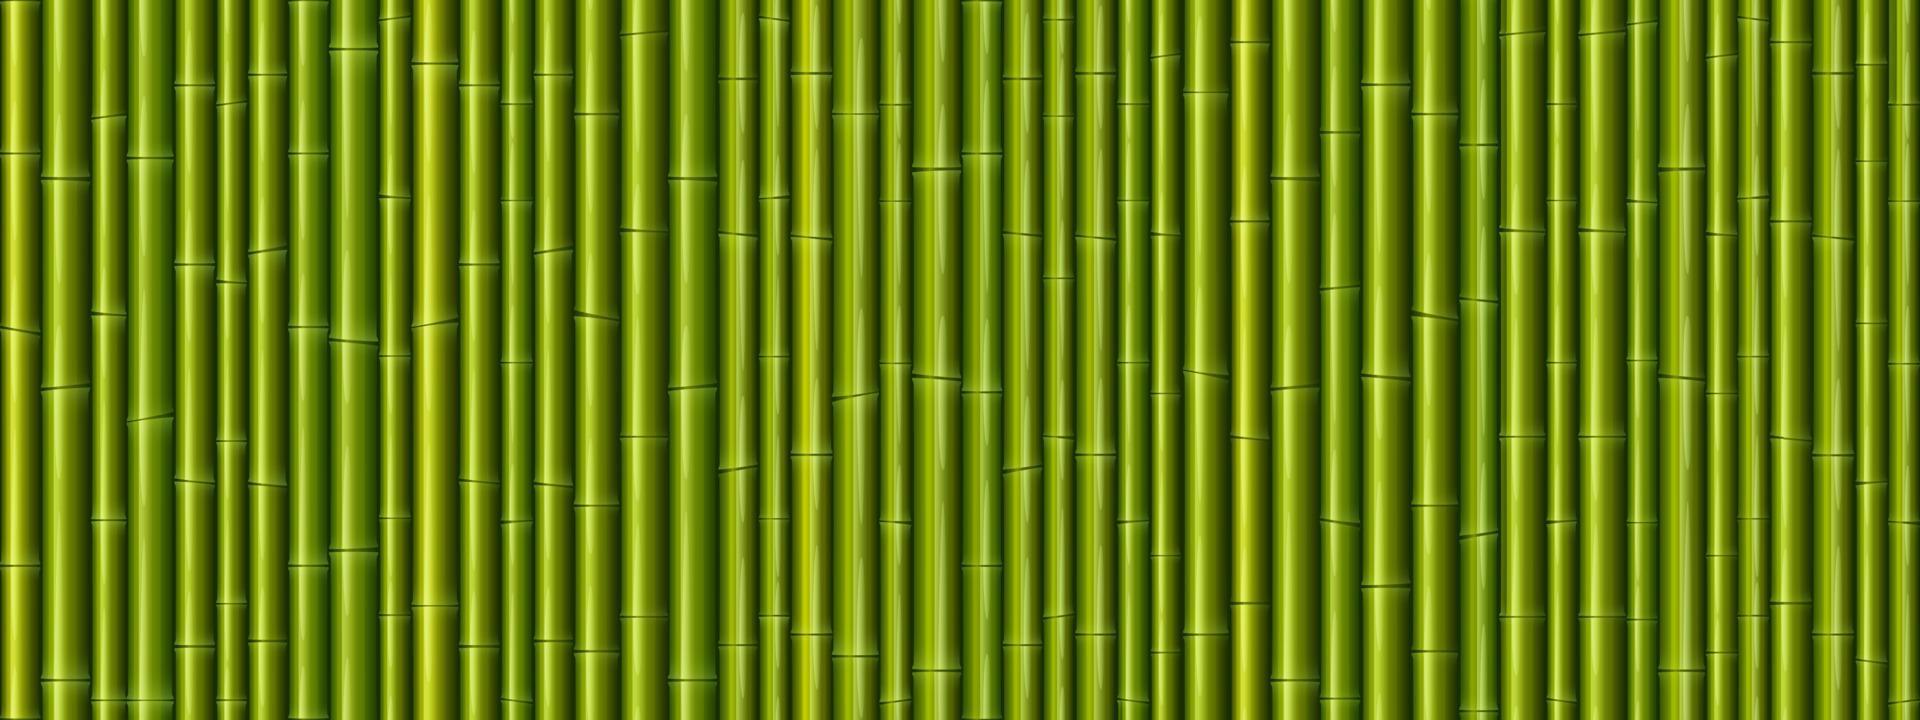 Bamboo wall texture seamless pattern vector